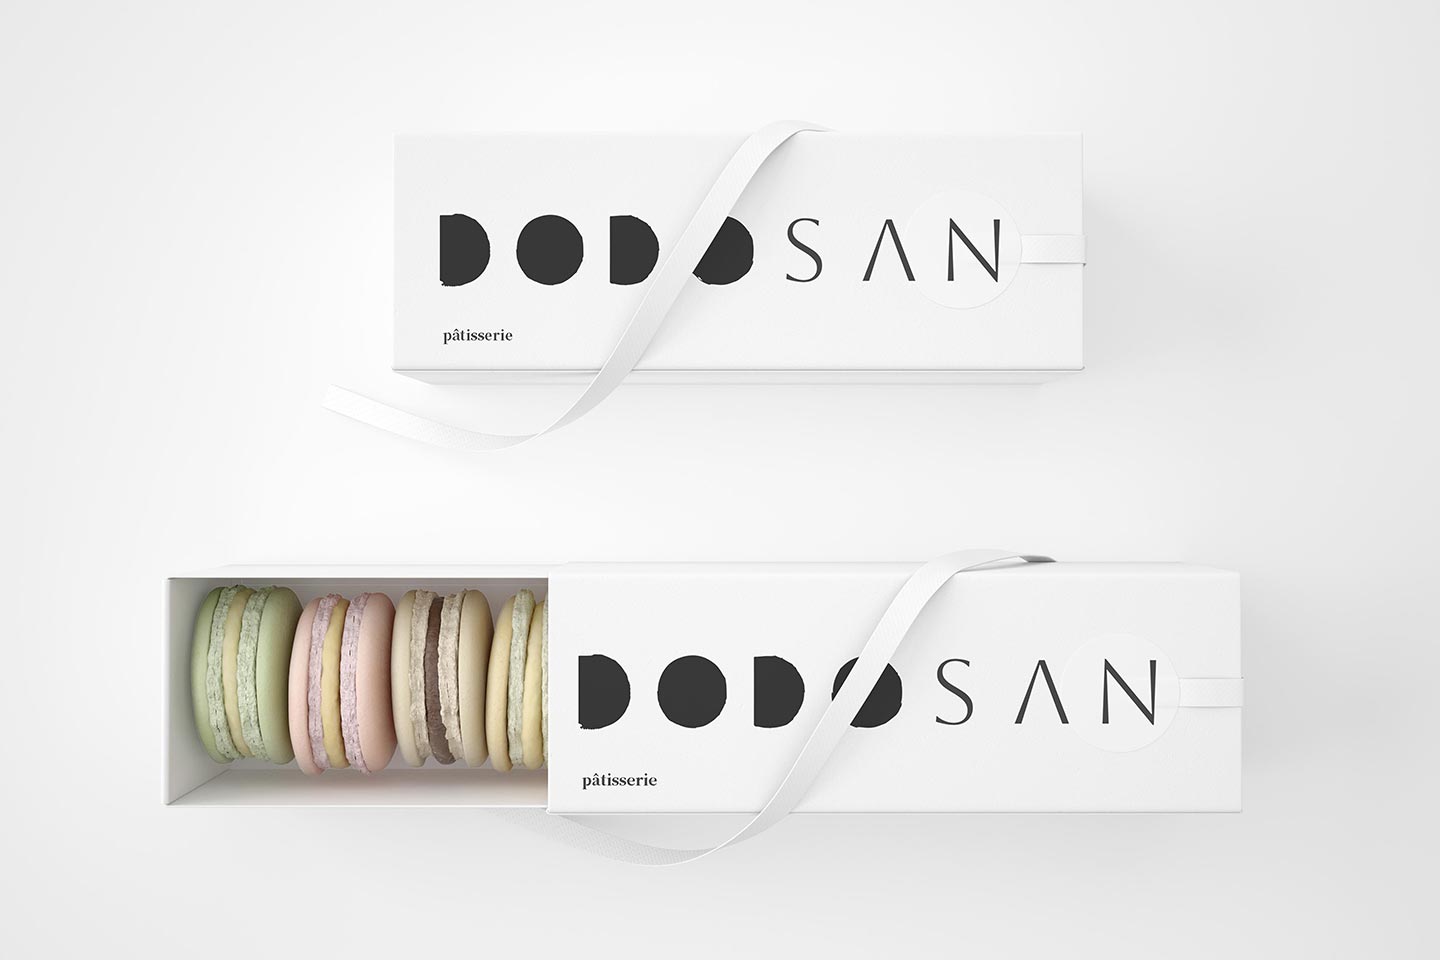 LOGO商標設計公司作品集案例：DODOASAN豆豆桑咖啡、百三咖啡、甜點禮盒設計、紙盒設計、包裝設計